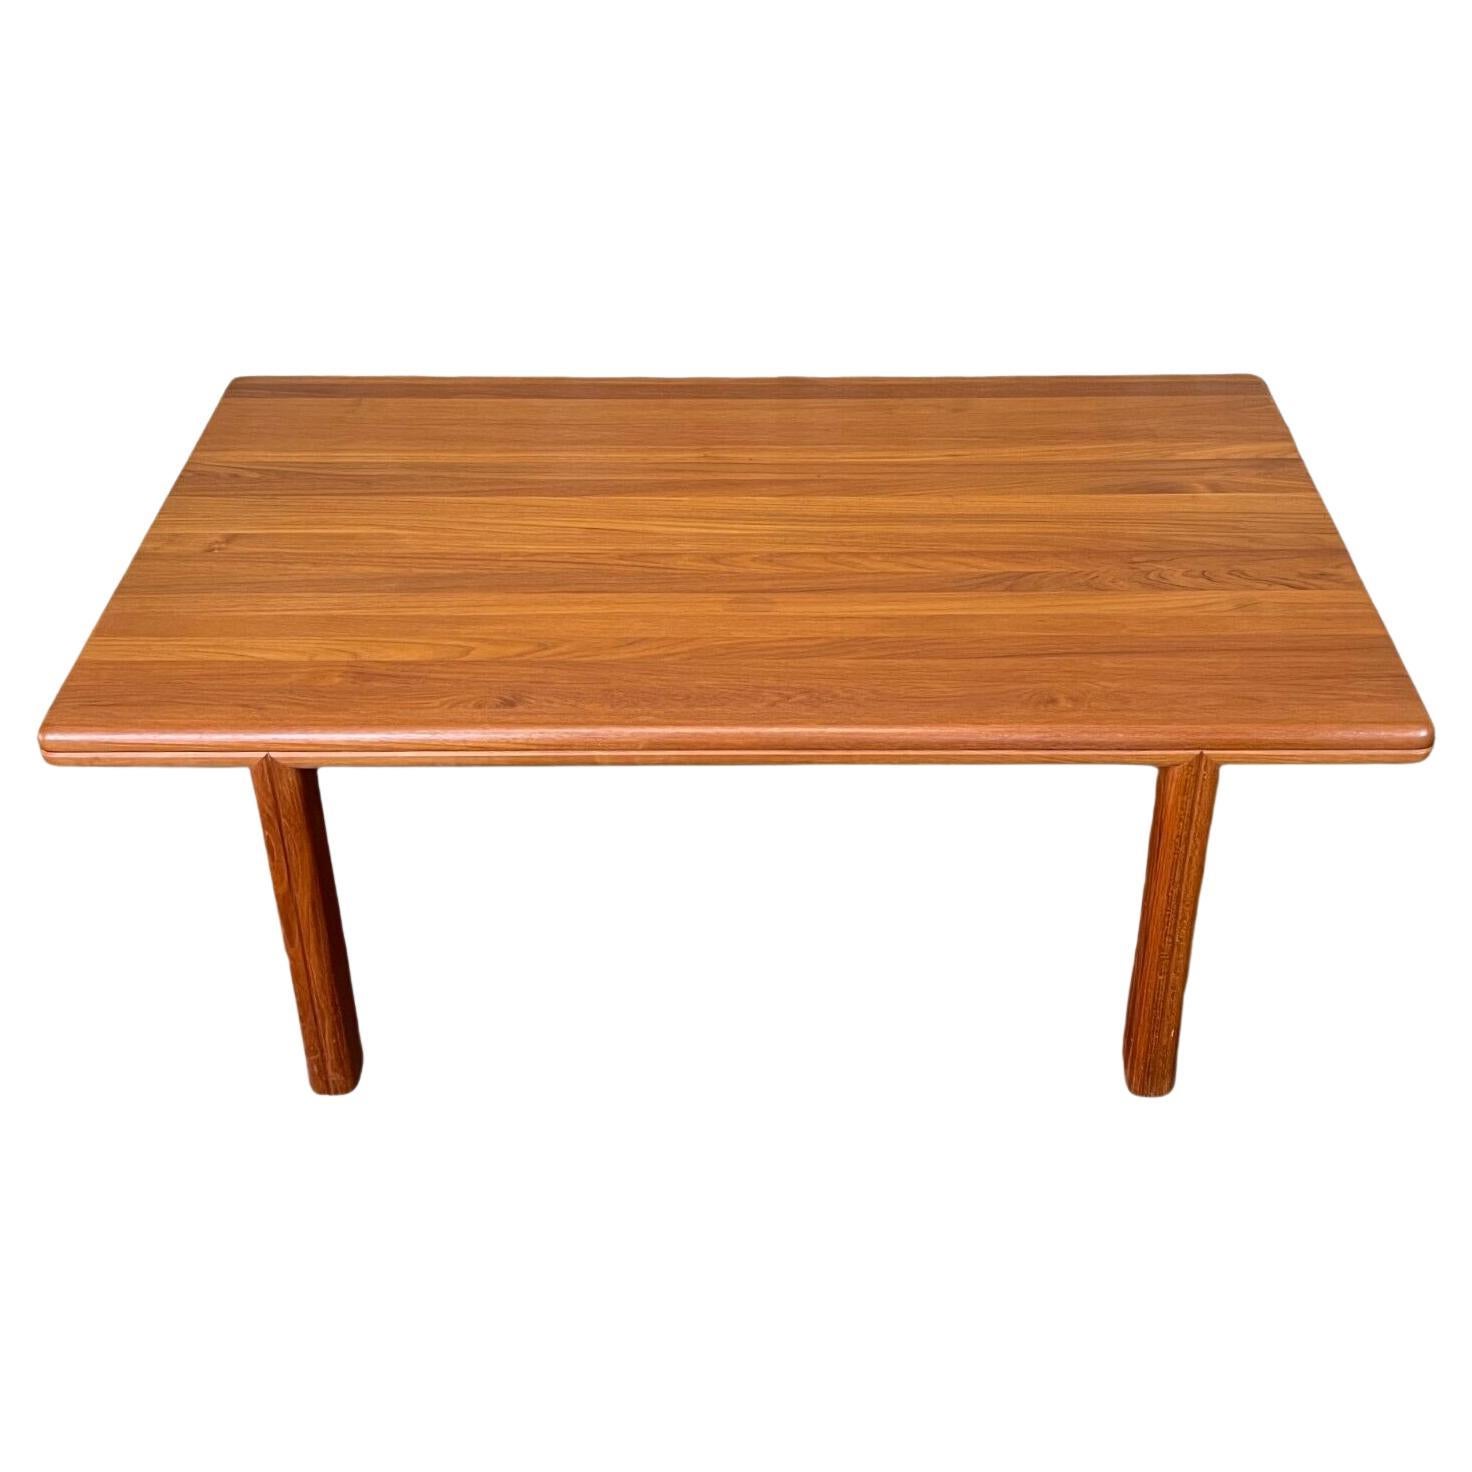 70s Teak Table Coffee Table Danish Design Denmark Mid Century For Sale